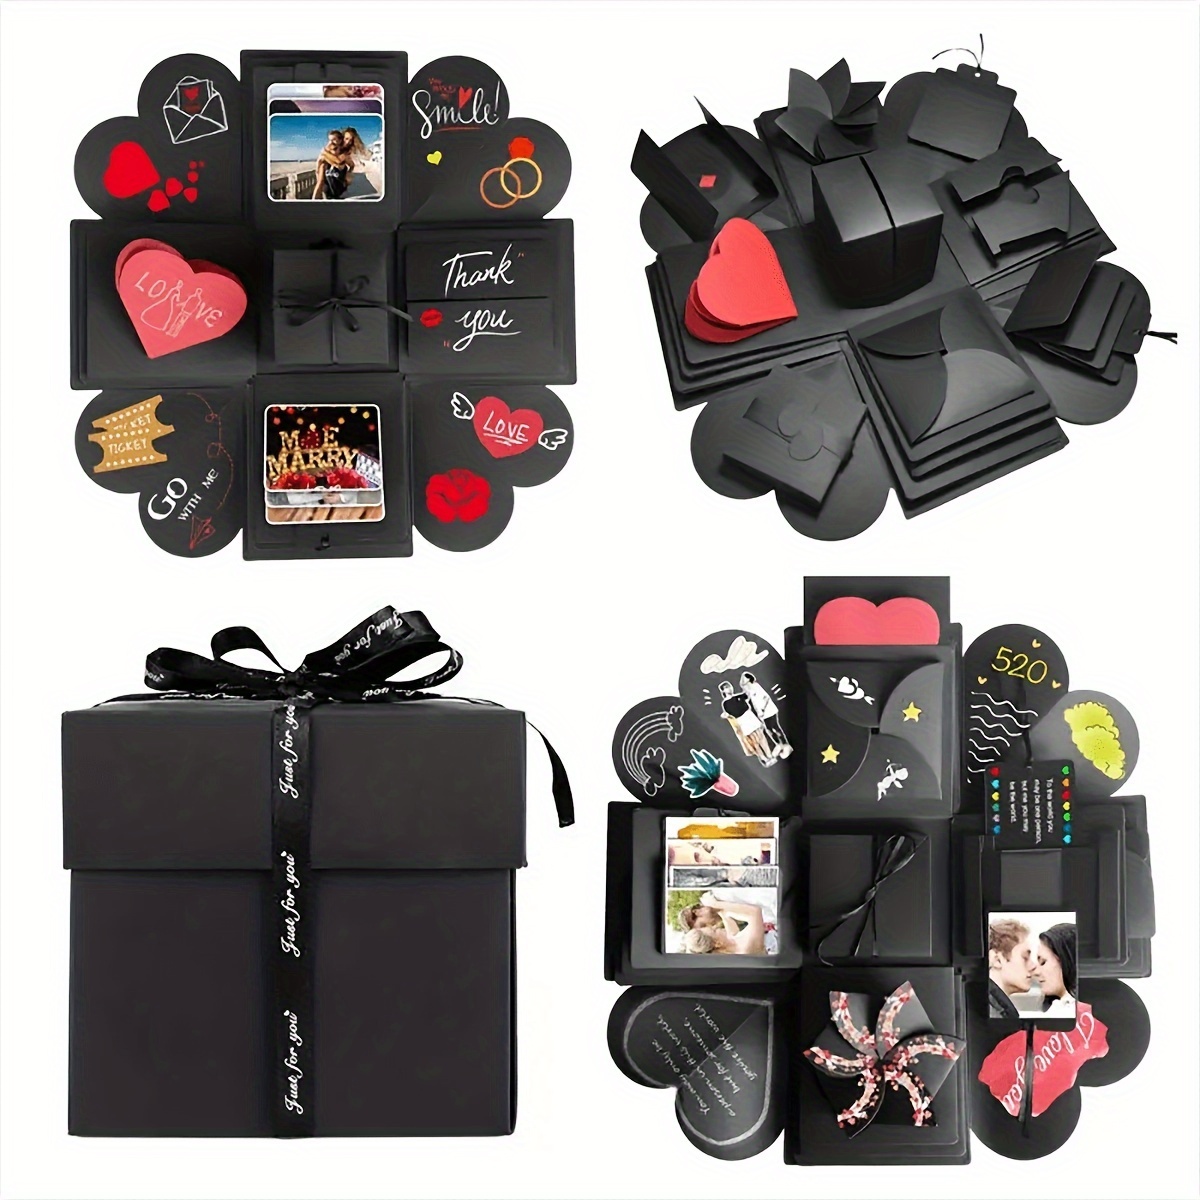 

1pc, Surprise Explosion Box Diy Handmade Proposal Ring Photo Album Couple Gift Photo Album Photo Collection, Handmade Photo Box For Birthday Gift Wedding Anniversary Valentine's Day